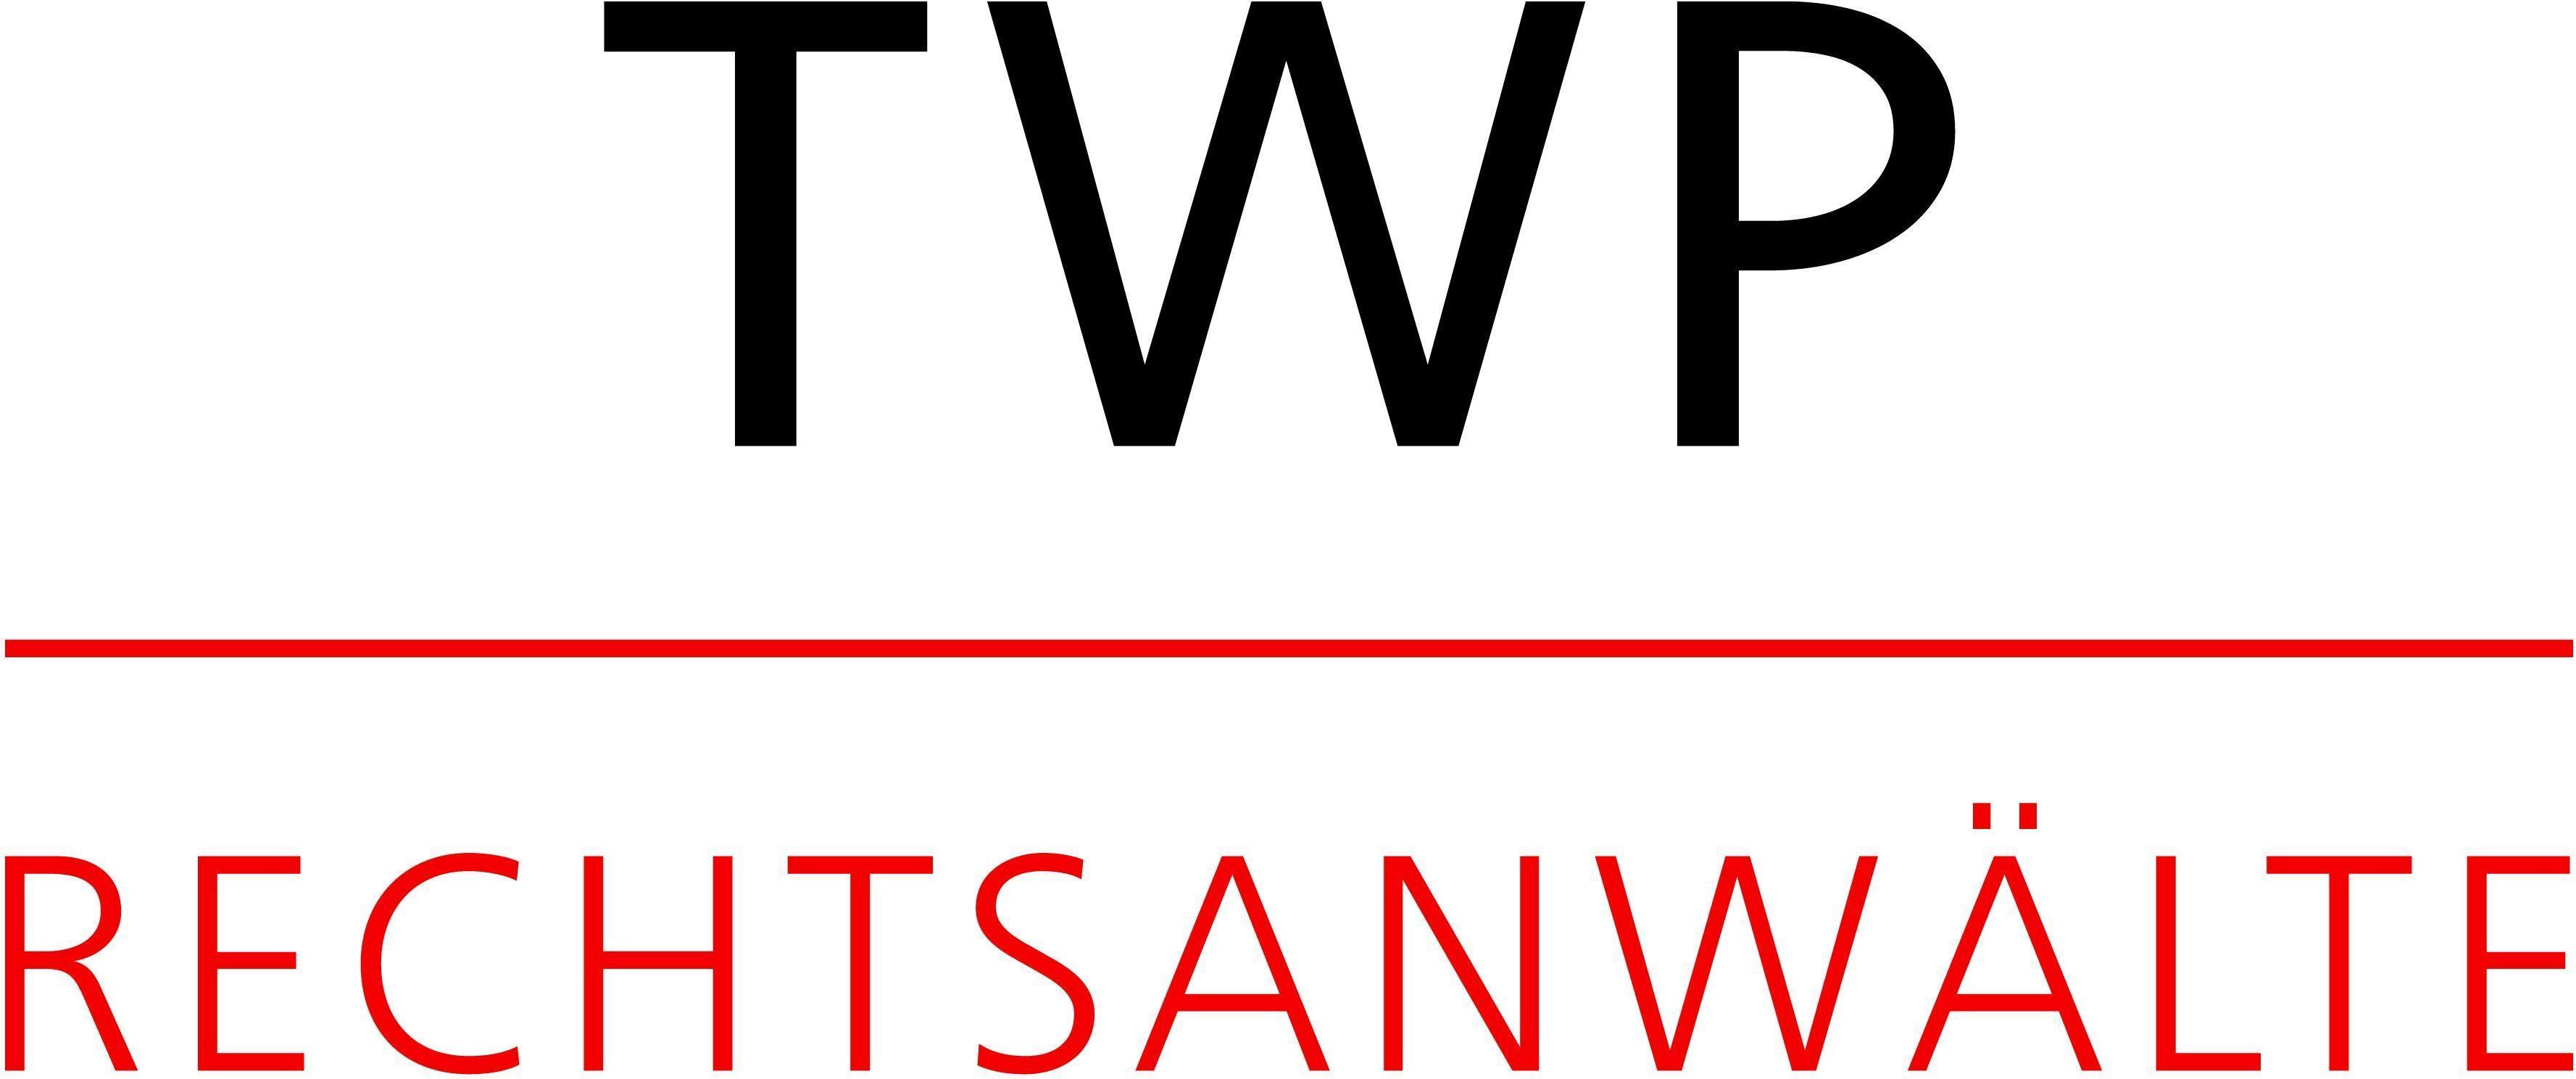 Logo TWP Rechtsanwälte Thurnher Wittwer Pfefferkorn & Partner Rechtsanwälte GmbH